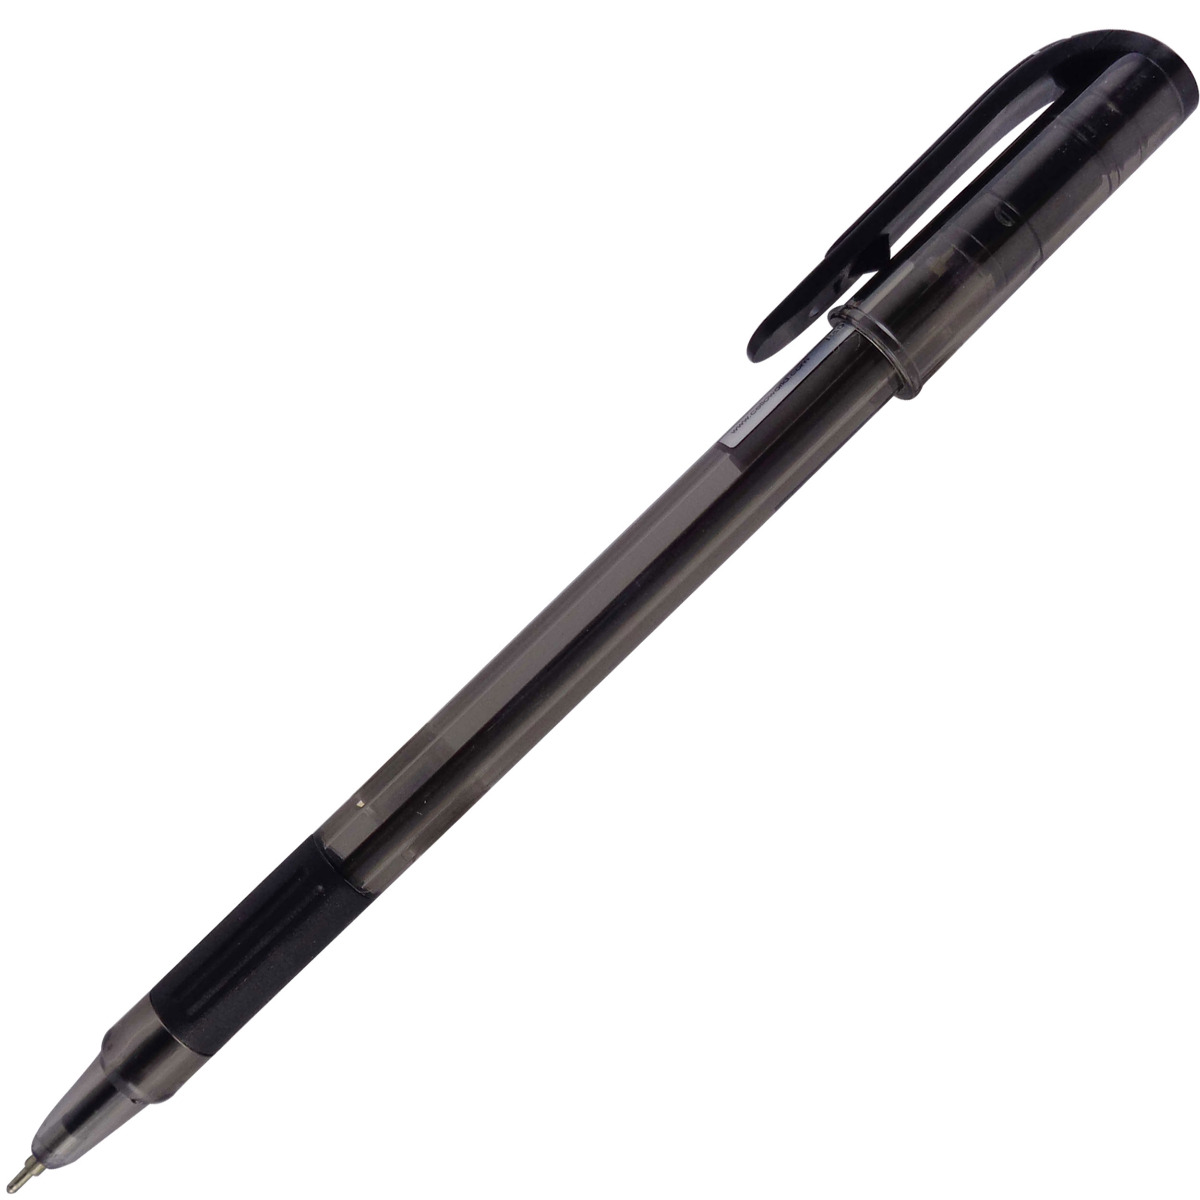 Cello winner Model: 13861 Transparent body with black ink fine tip cap type ball point pen